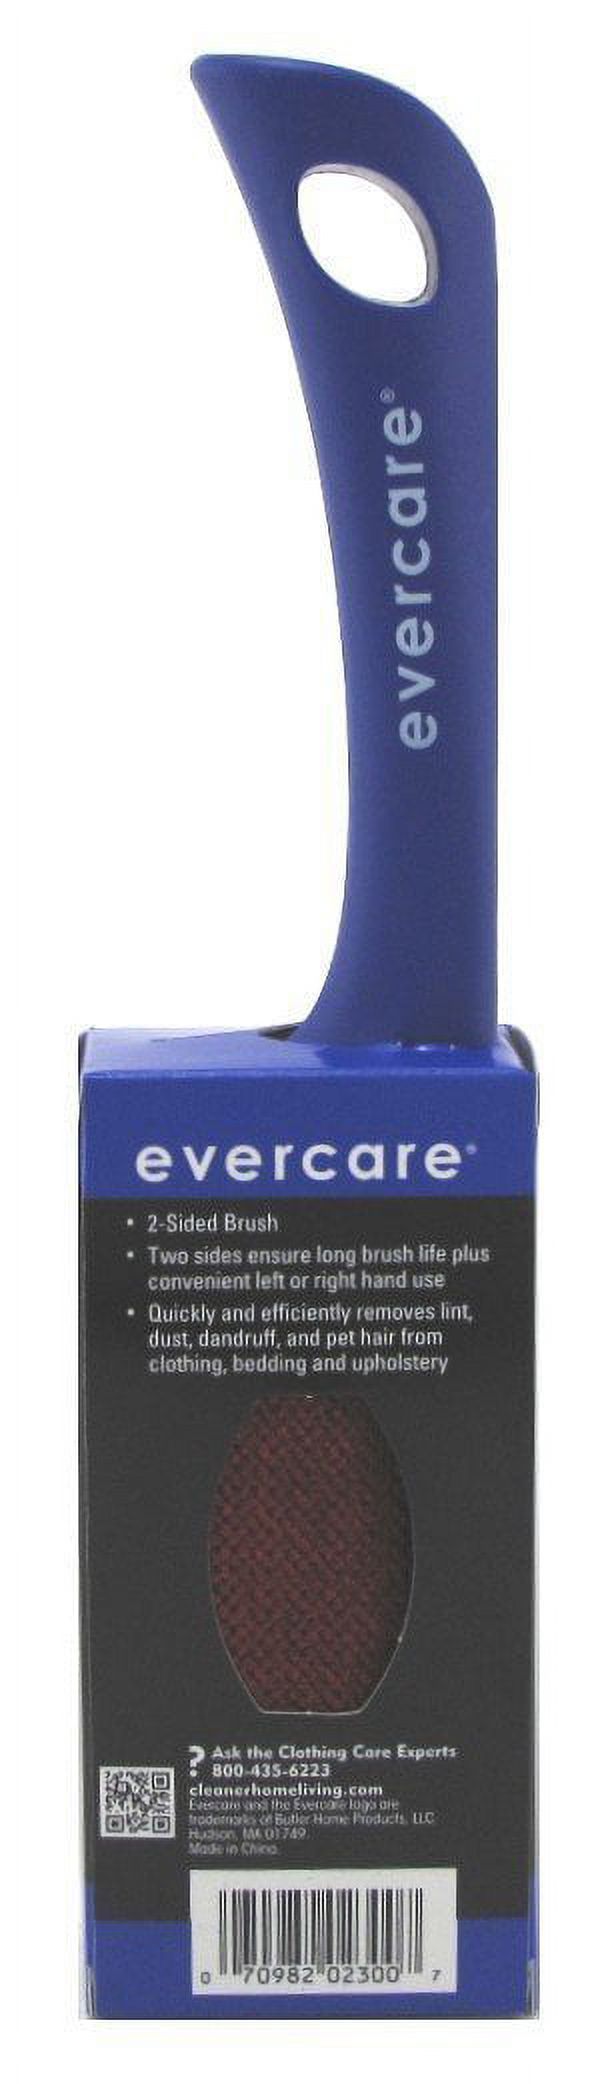 Evercare Magik Brush Lint Brush - image 2 of 2